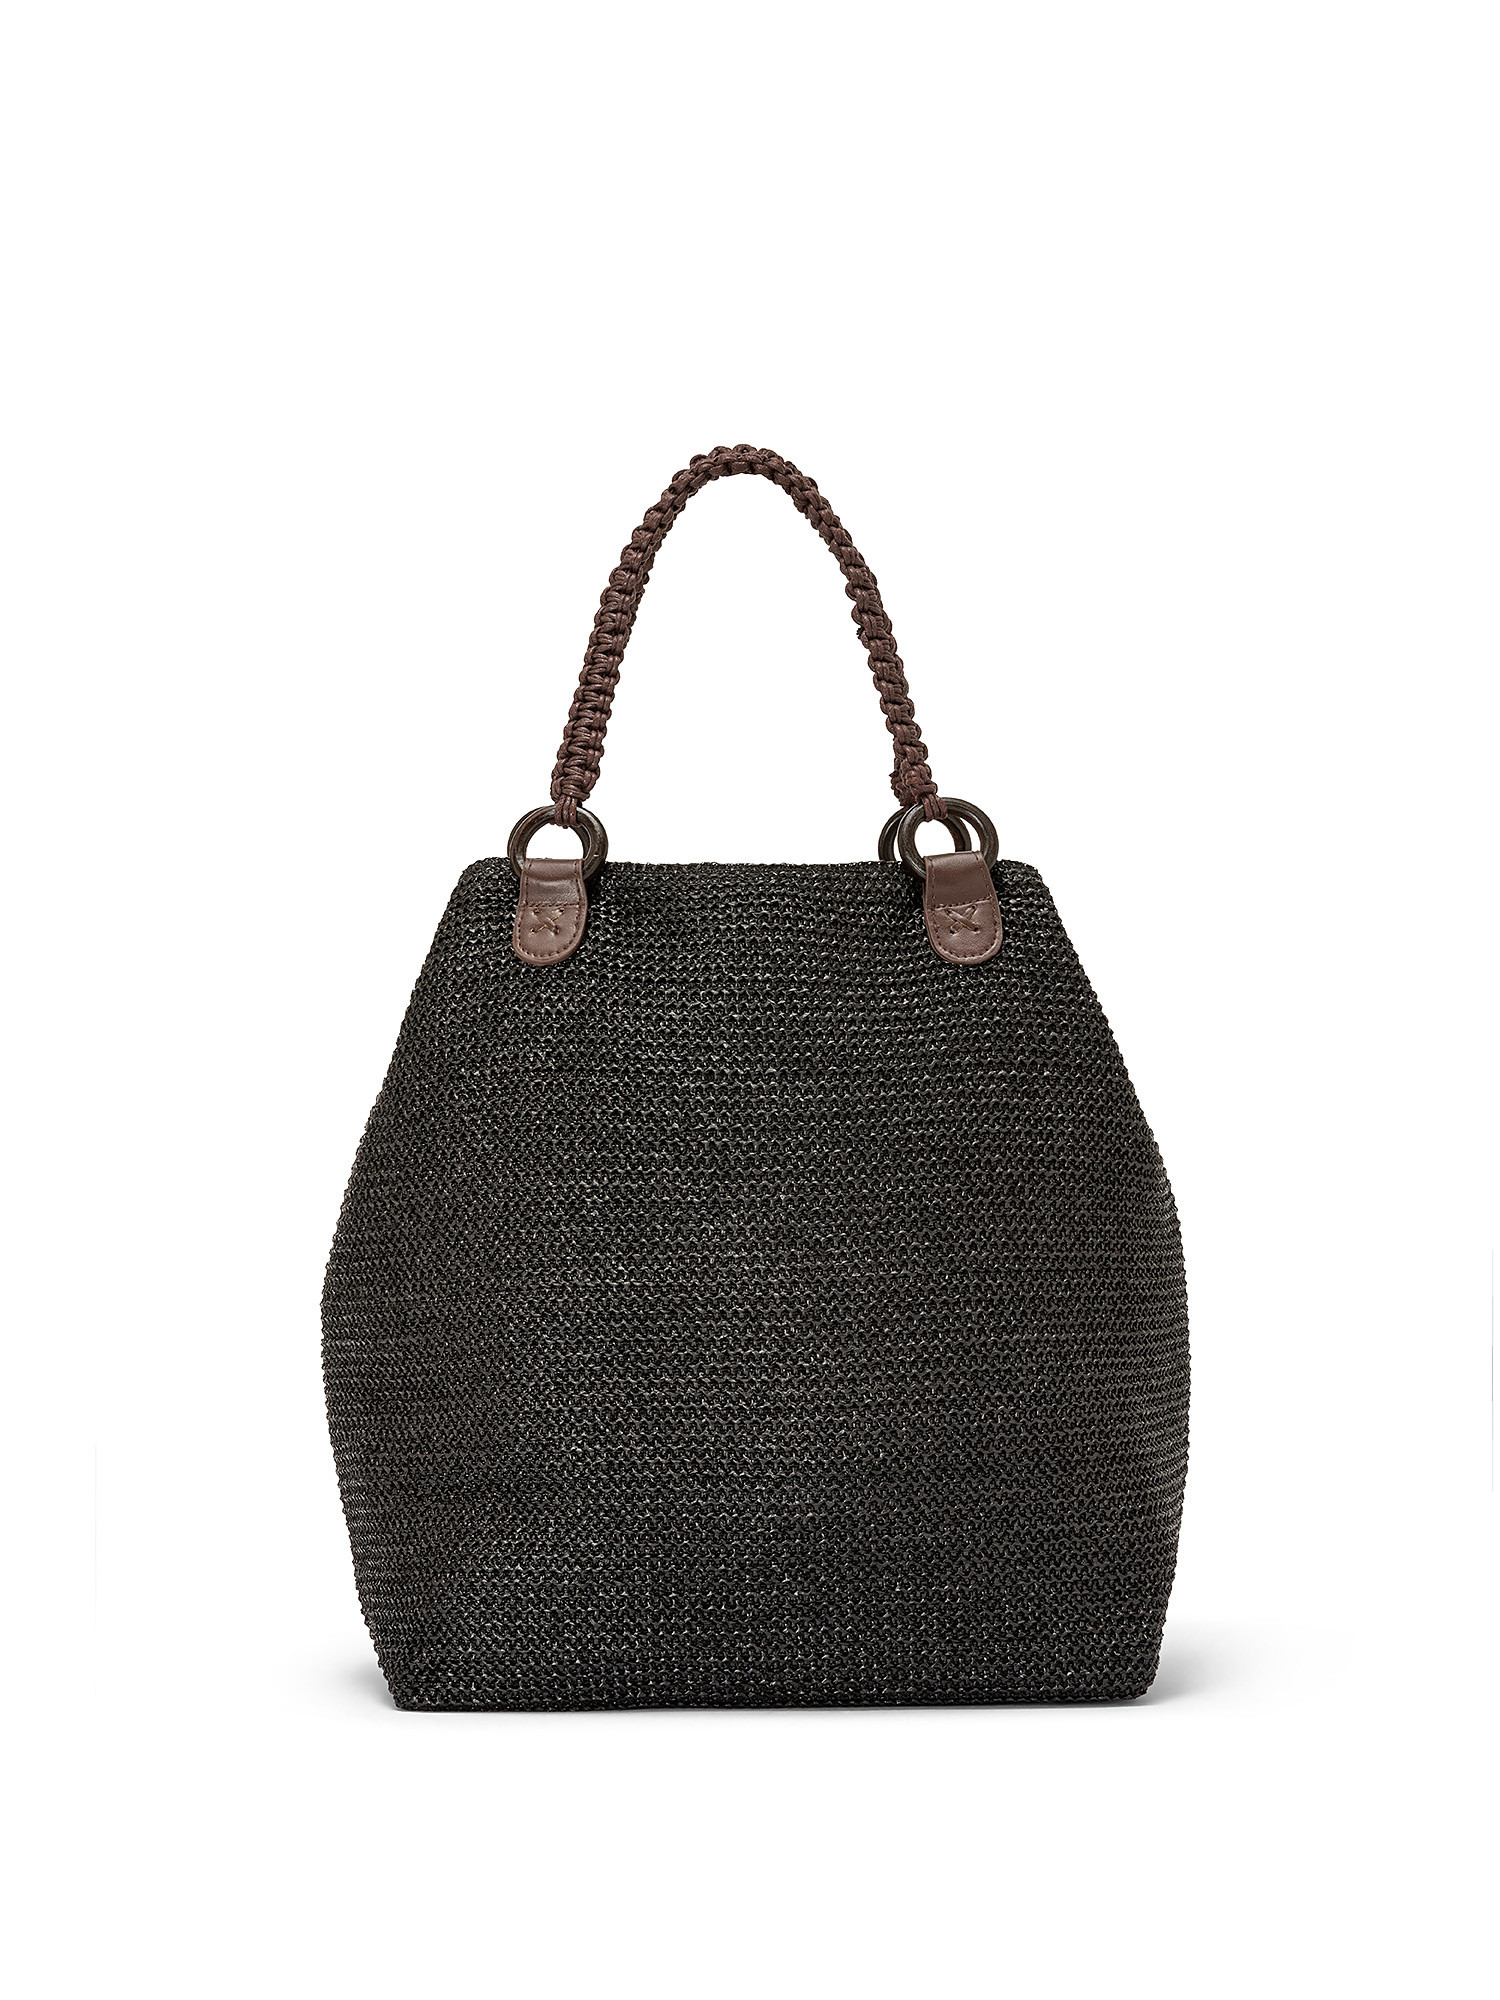 Straw-effect shopping bag, Black, large image number 0